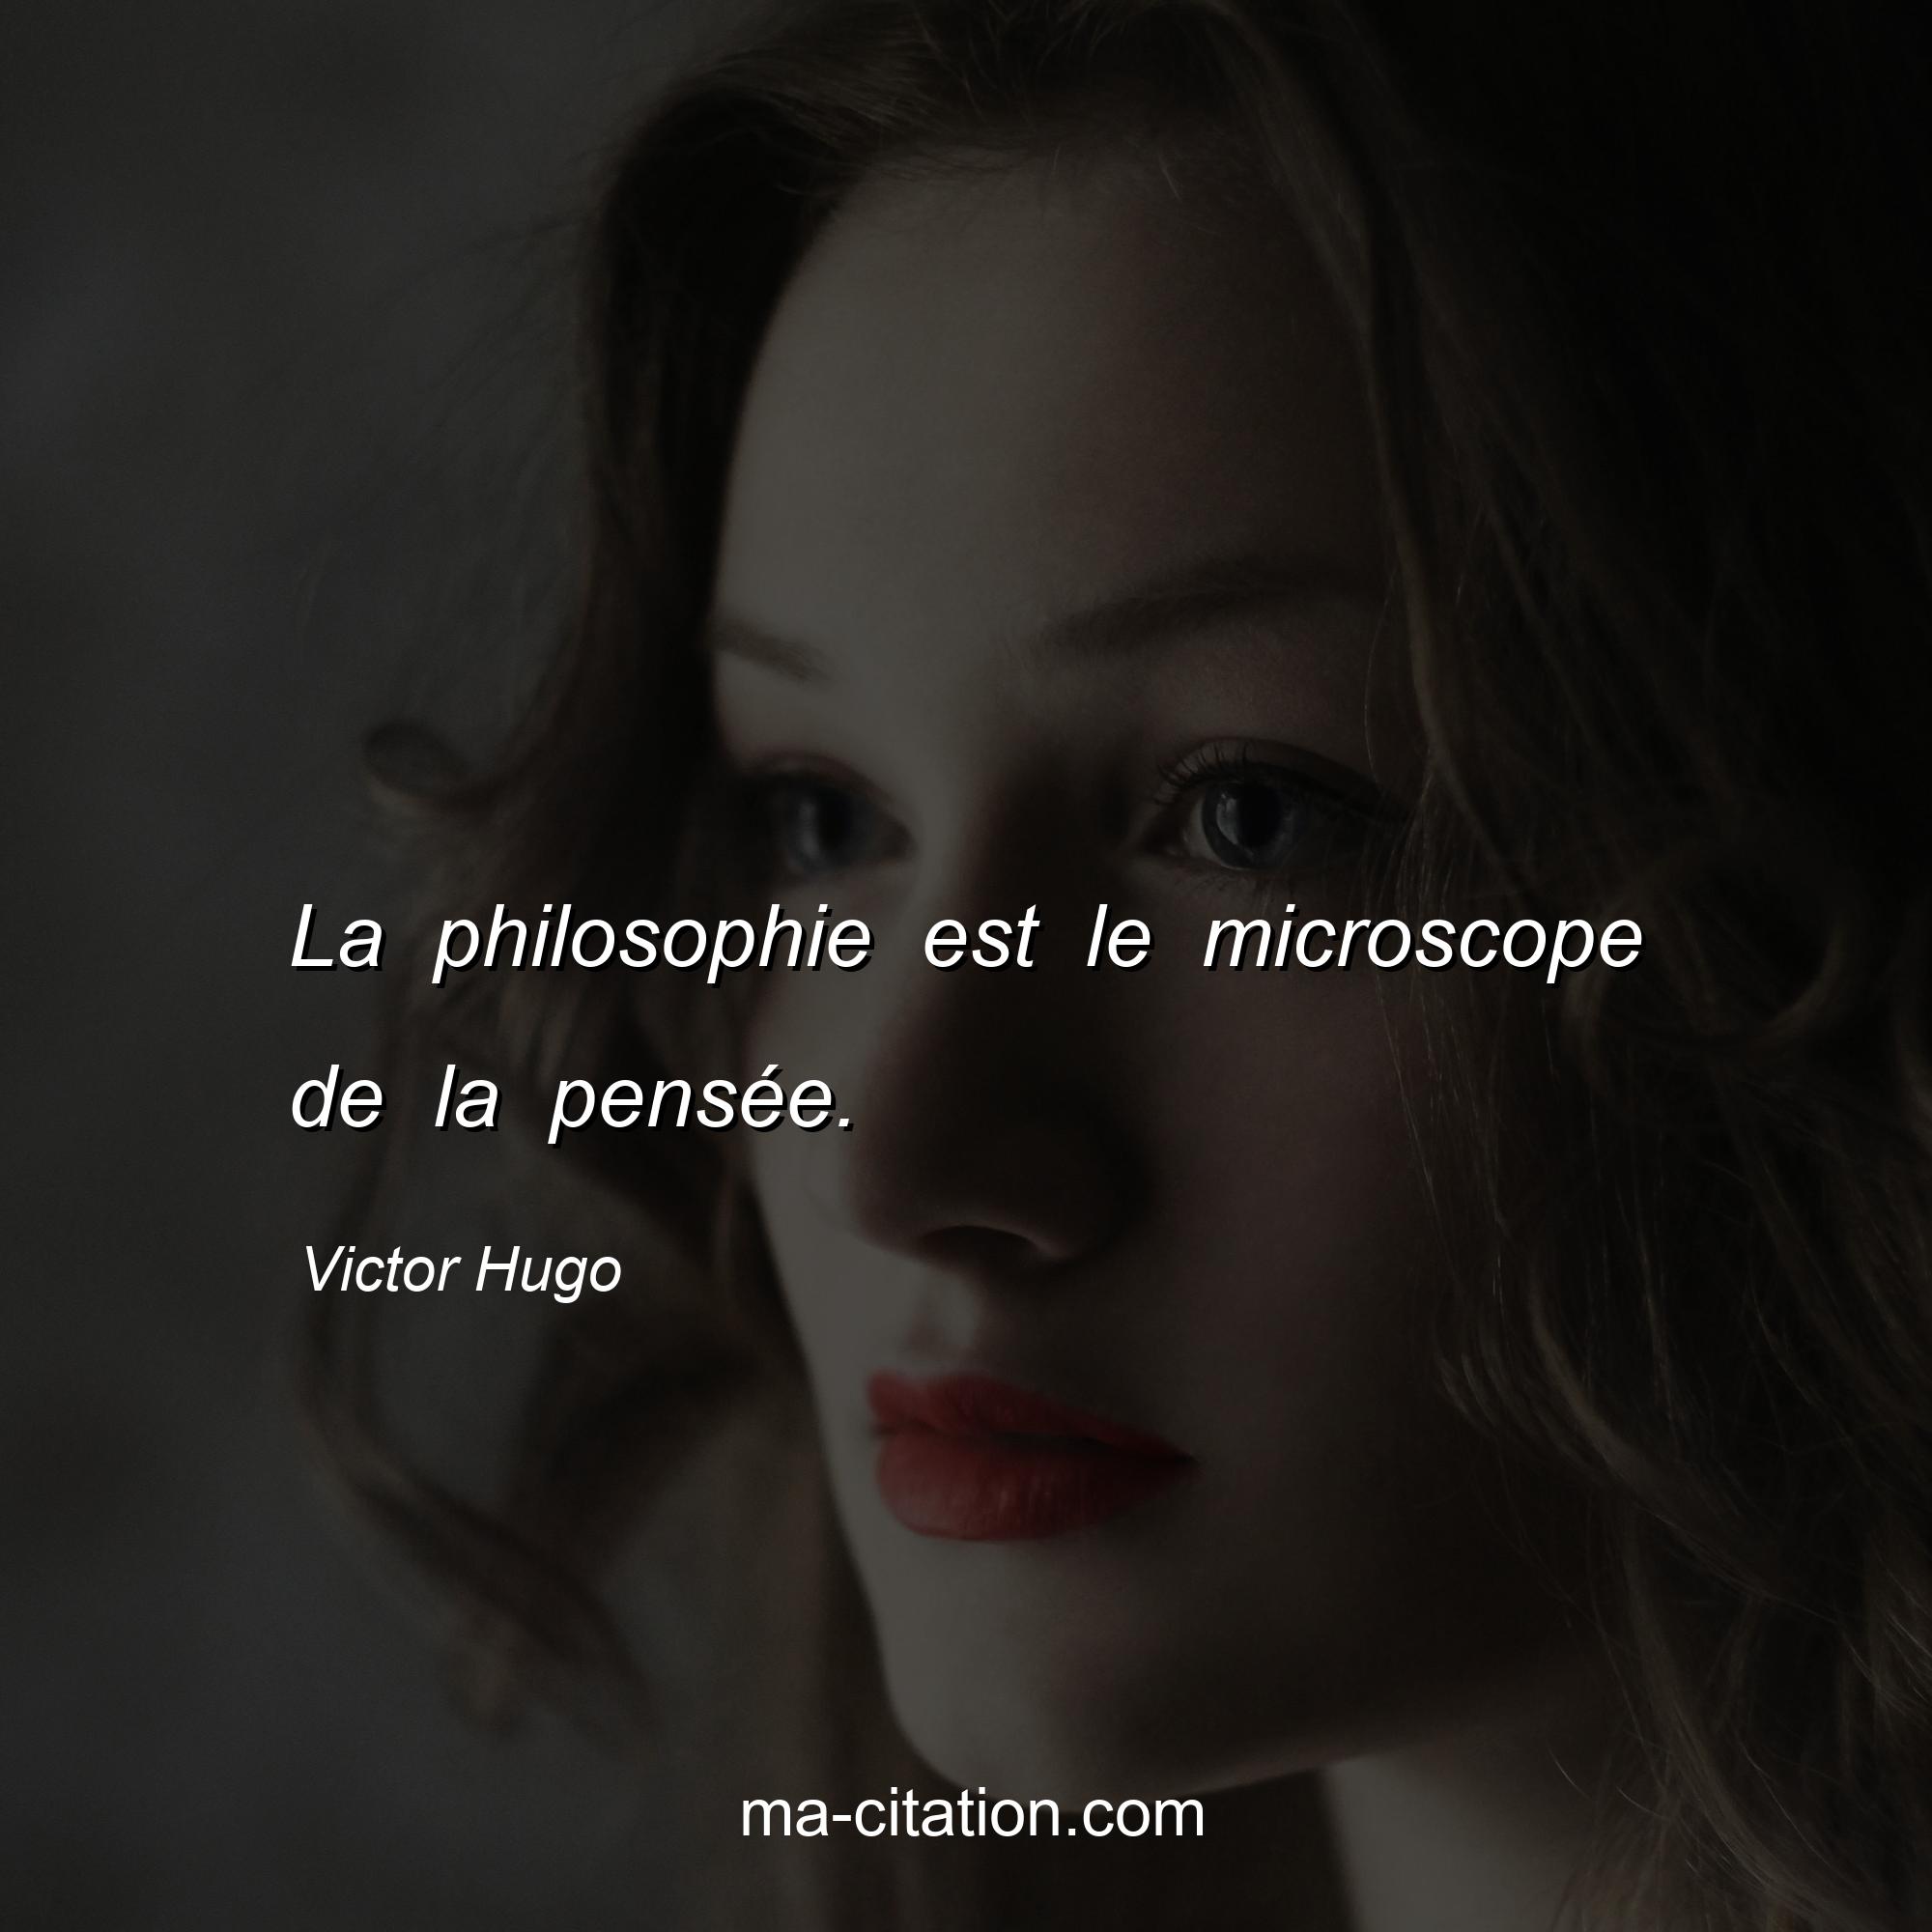 Victor Hugo : La philosophie est le microscope de la pensée.